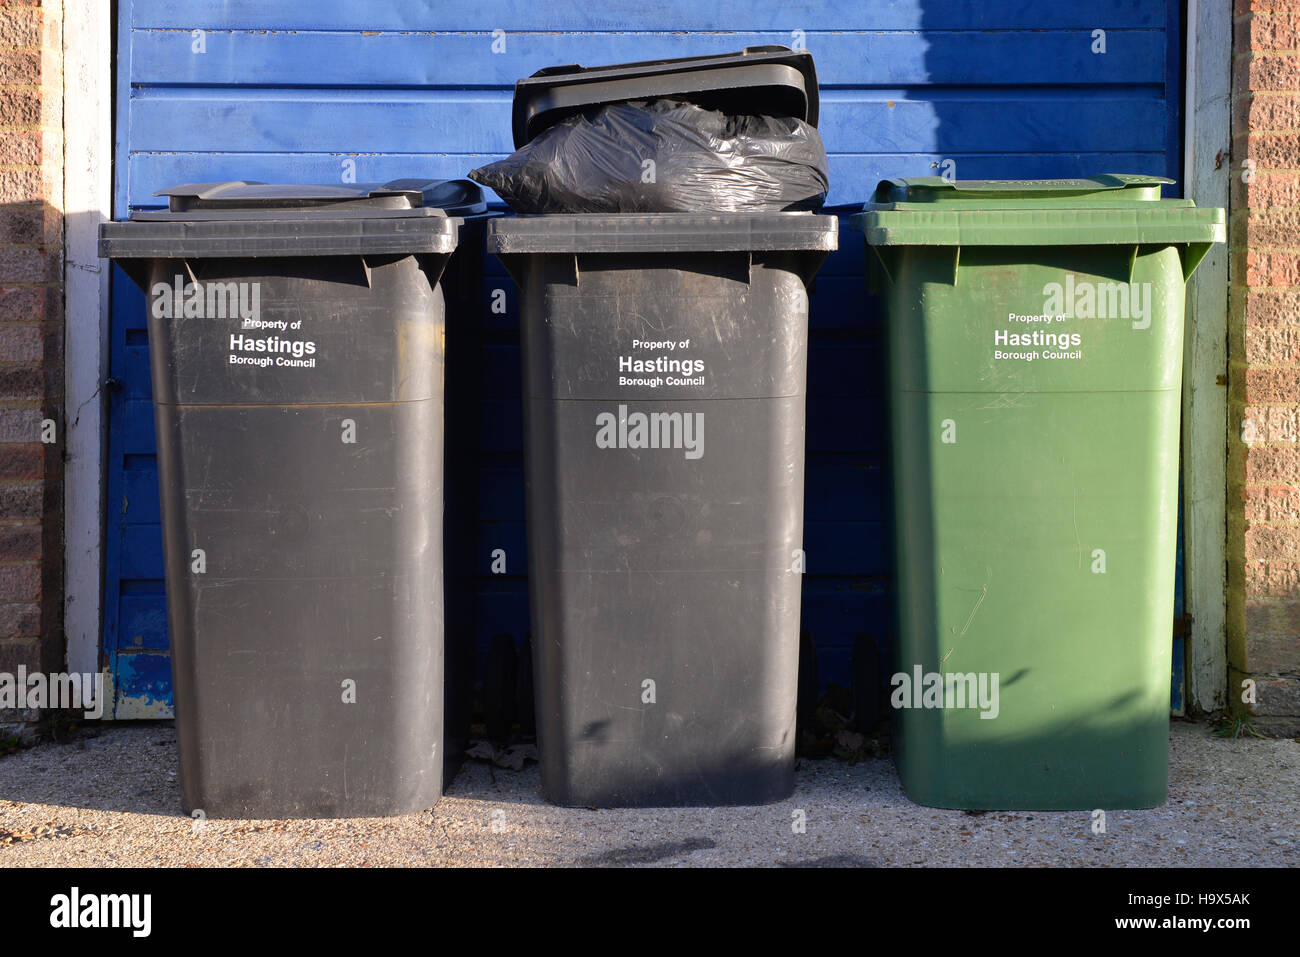 Wheelie bins, Hastings borough council Stock Photo - Alamy